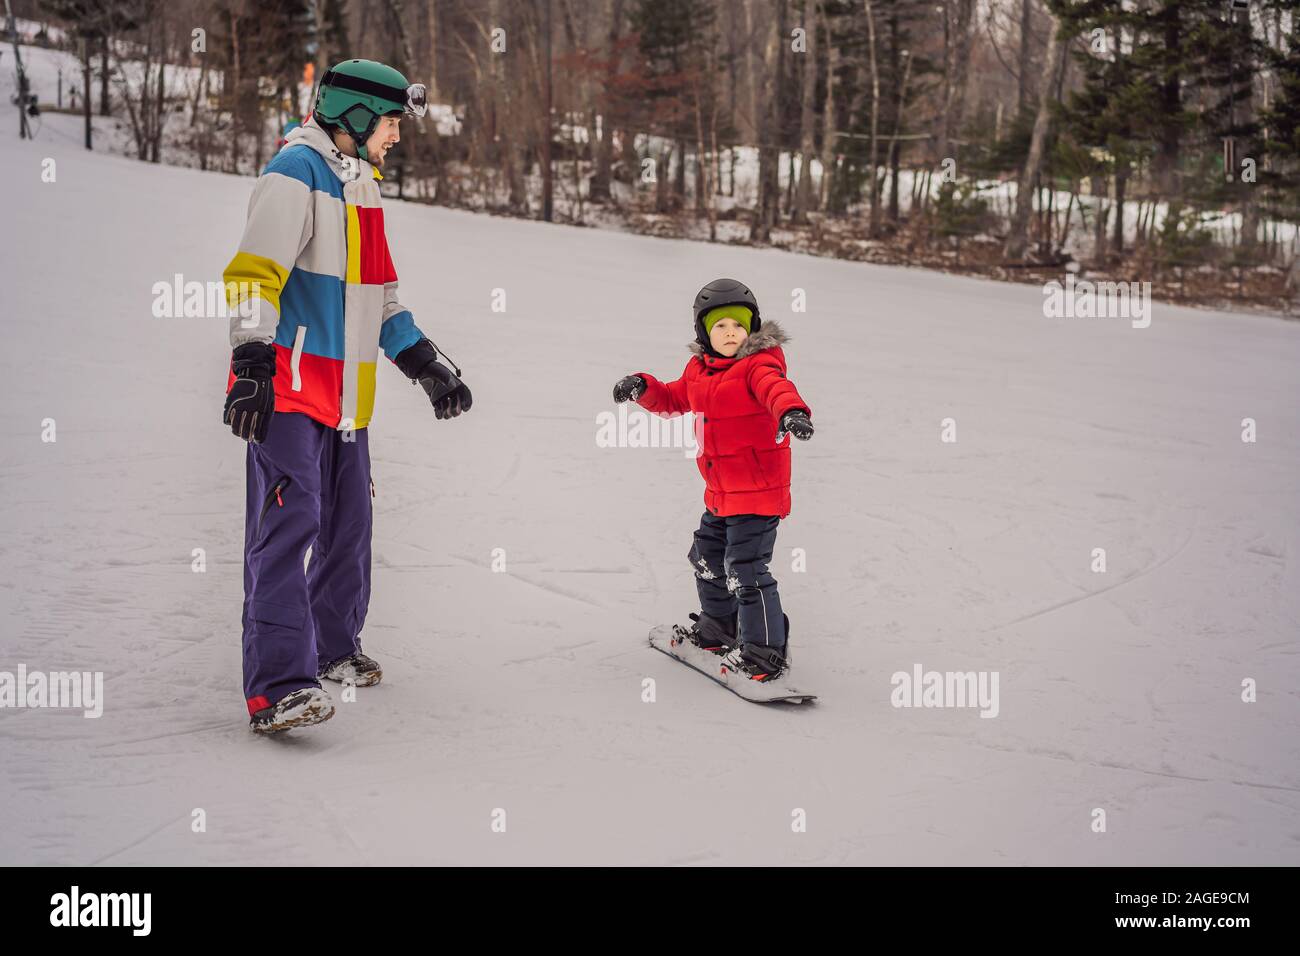 Snowboard instructor teaches a boy to snowboarding. Activities for children in winter. Children's winter sport. Lifestyle Stock Photo